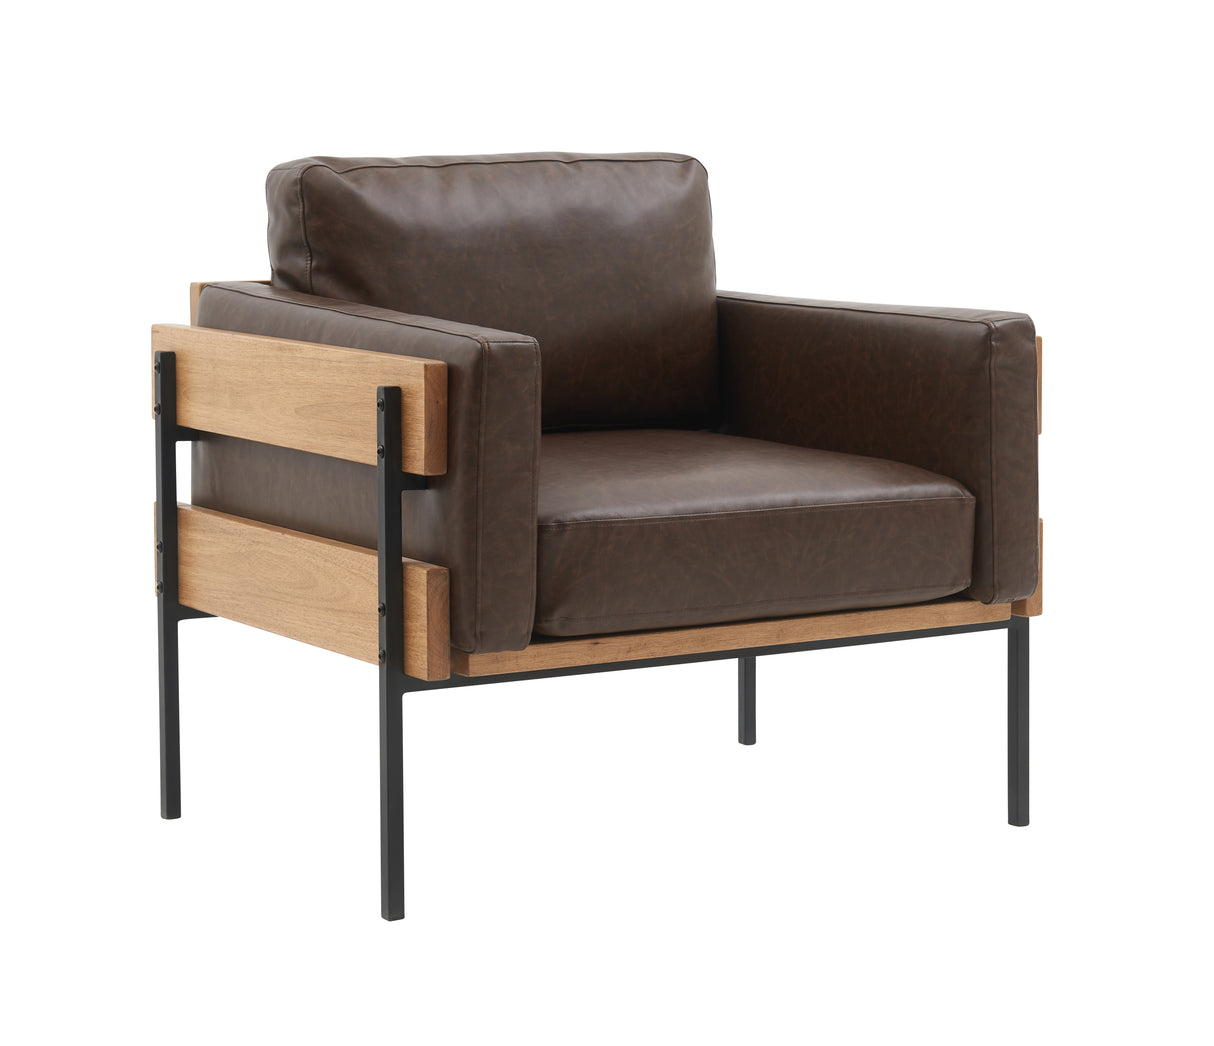 Single leisure sofa chair living room PU leather chair modern comfortable leisure armchair - Home Elegance USA